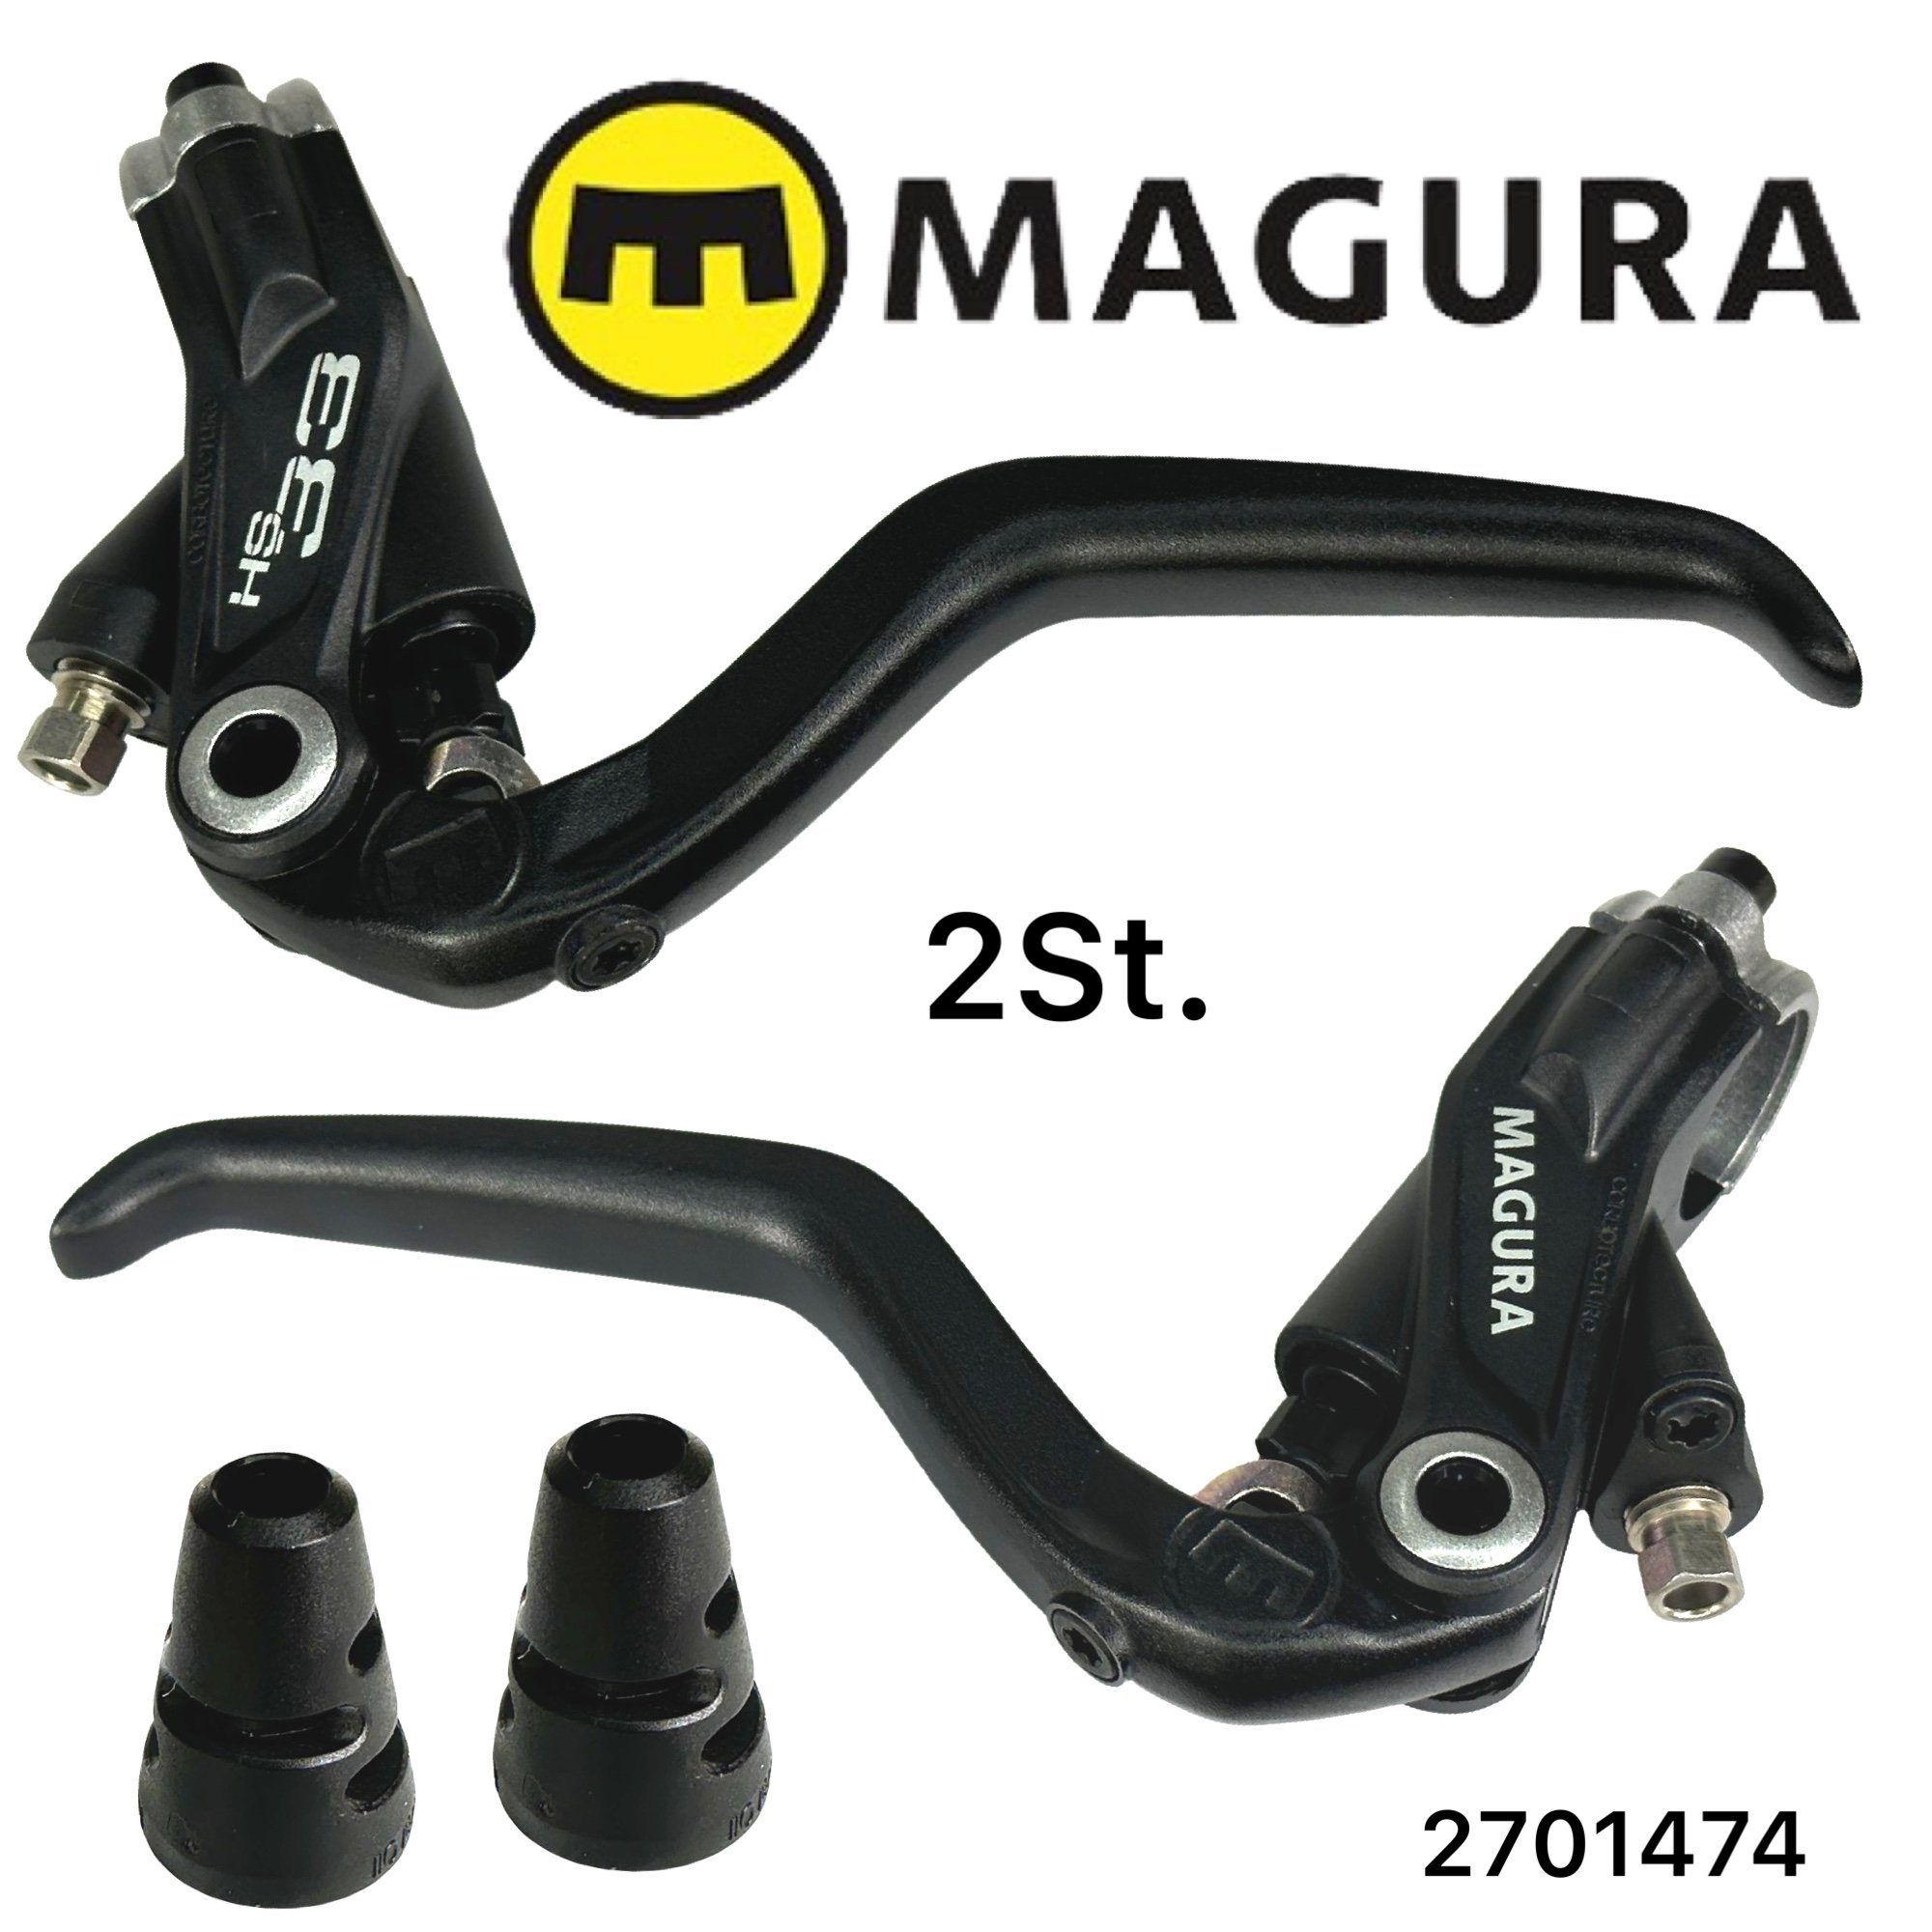 Magura HS11 Easy Mount Carbotecture® Bremsen-Set kaufen